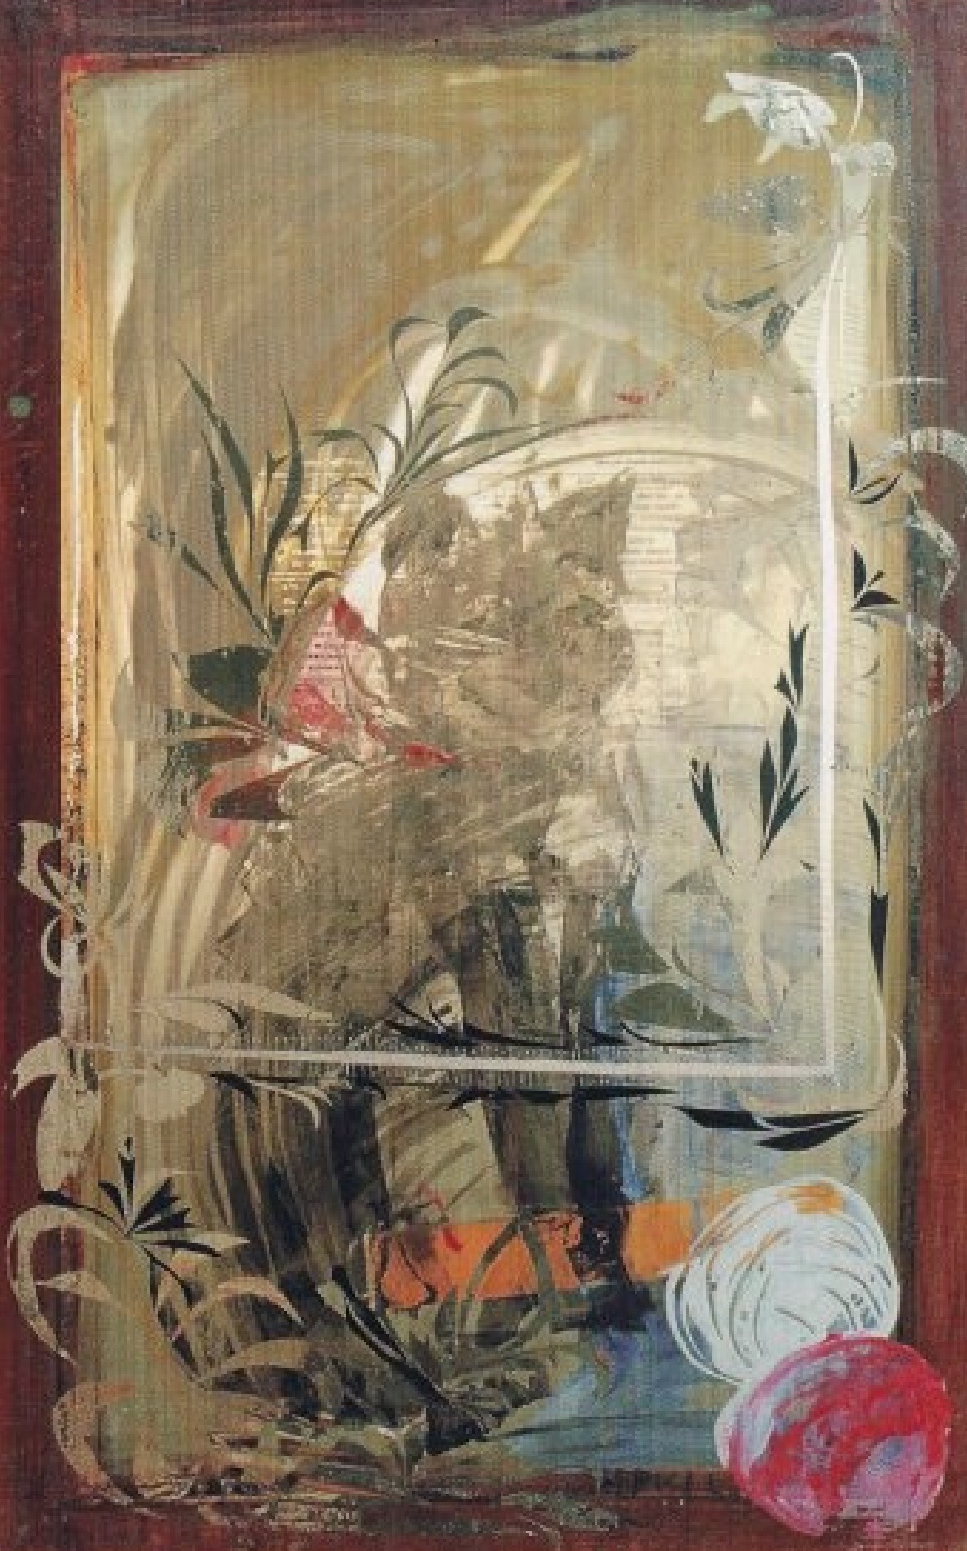 "Hidden Kitty" Painting Light Panel Rumyanka Bozhkova